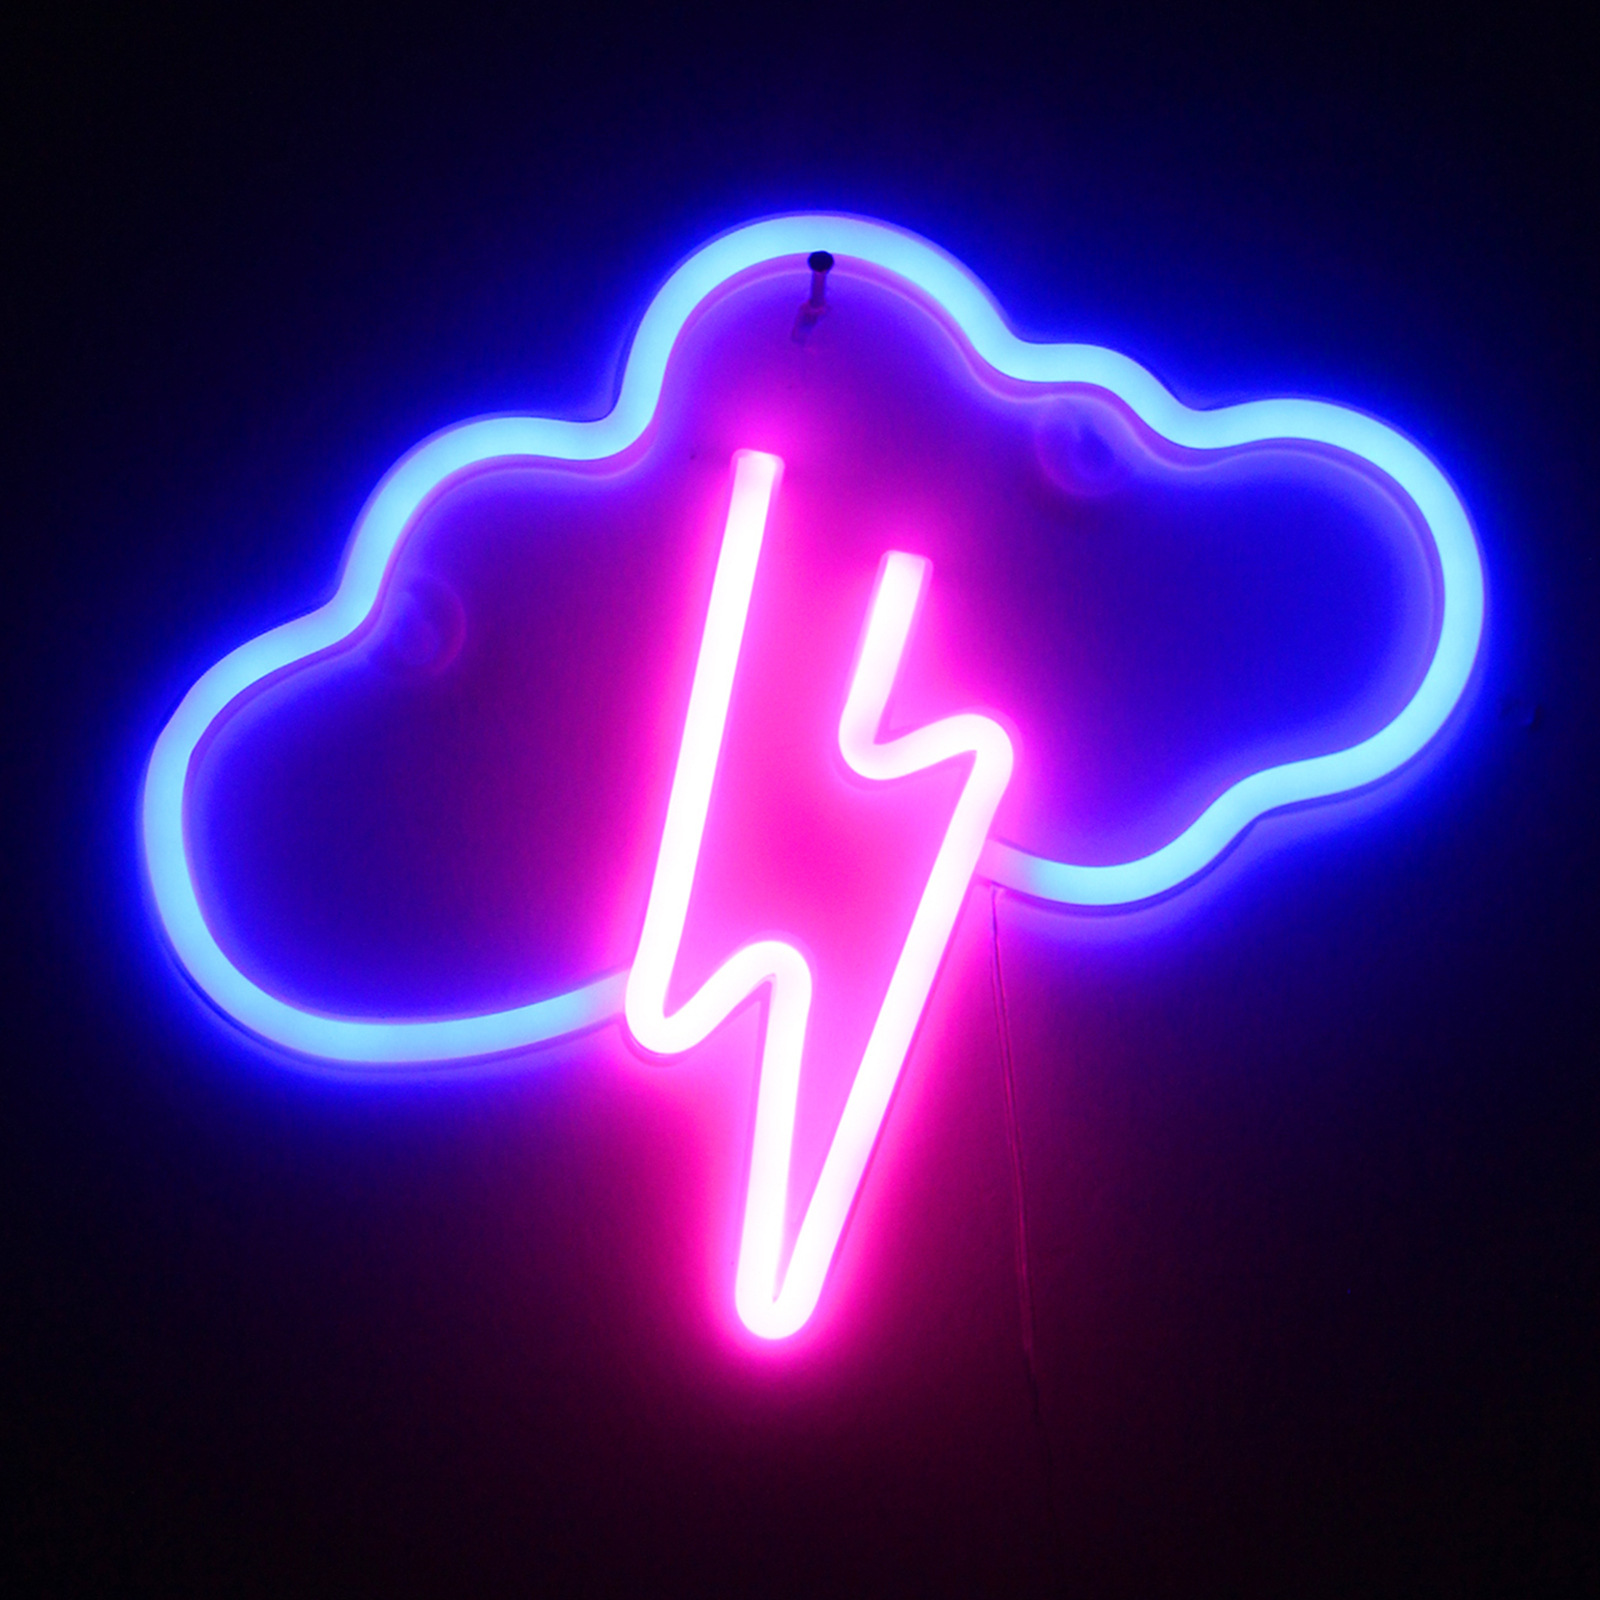 Thunderstorm Shape LED Neon za $12.99 / ~52zł